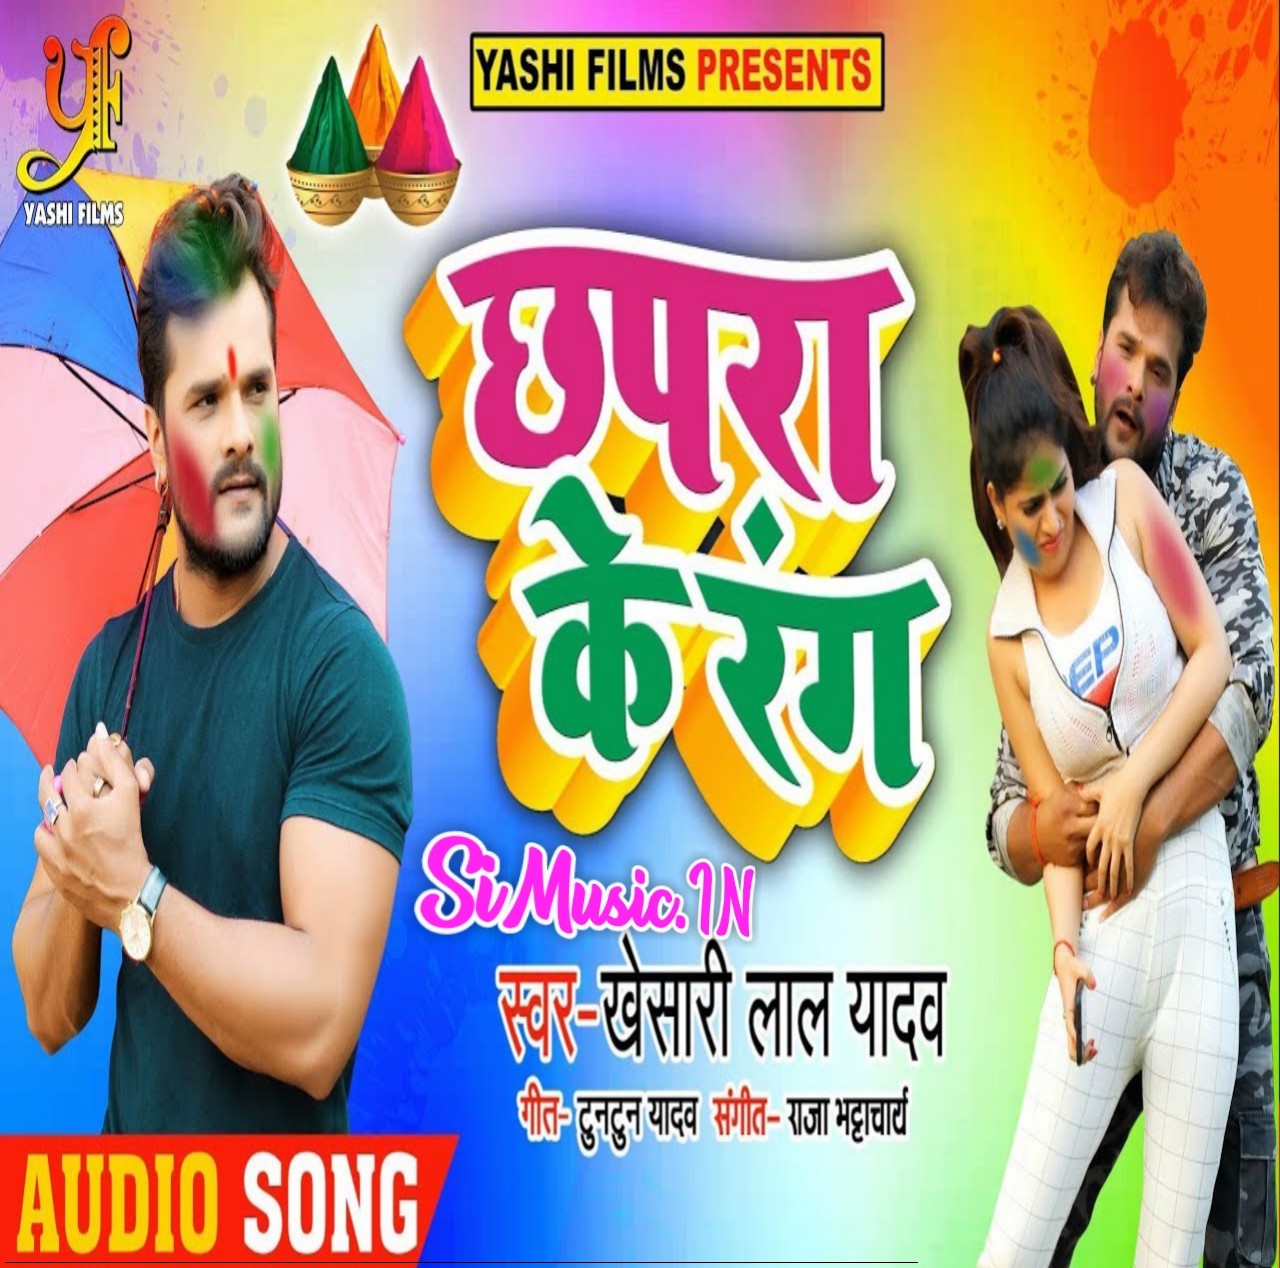 Chhapra Ke Rang Khesari Lal Yadav 2020 Mp3 Songs